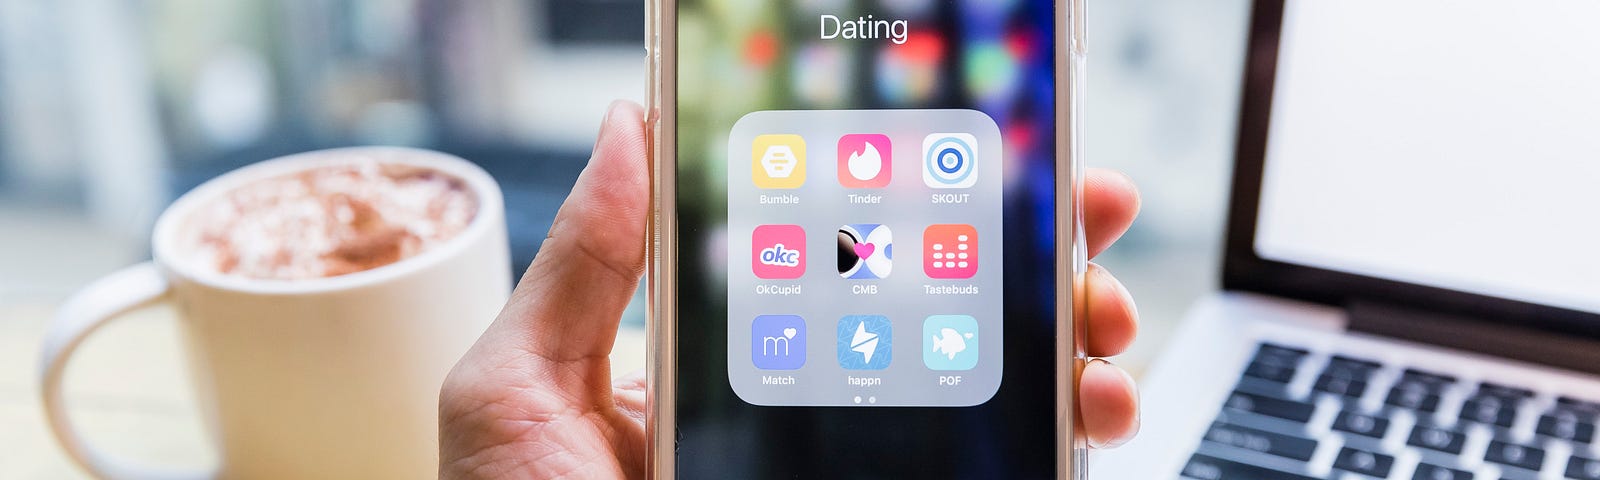 Dating app stories